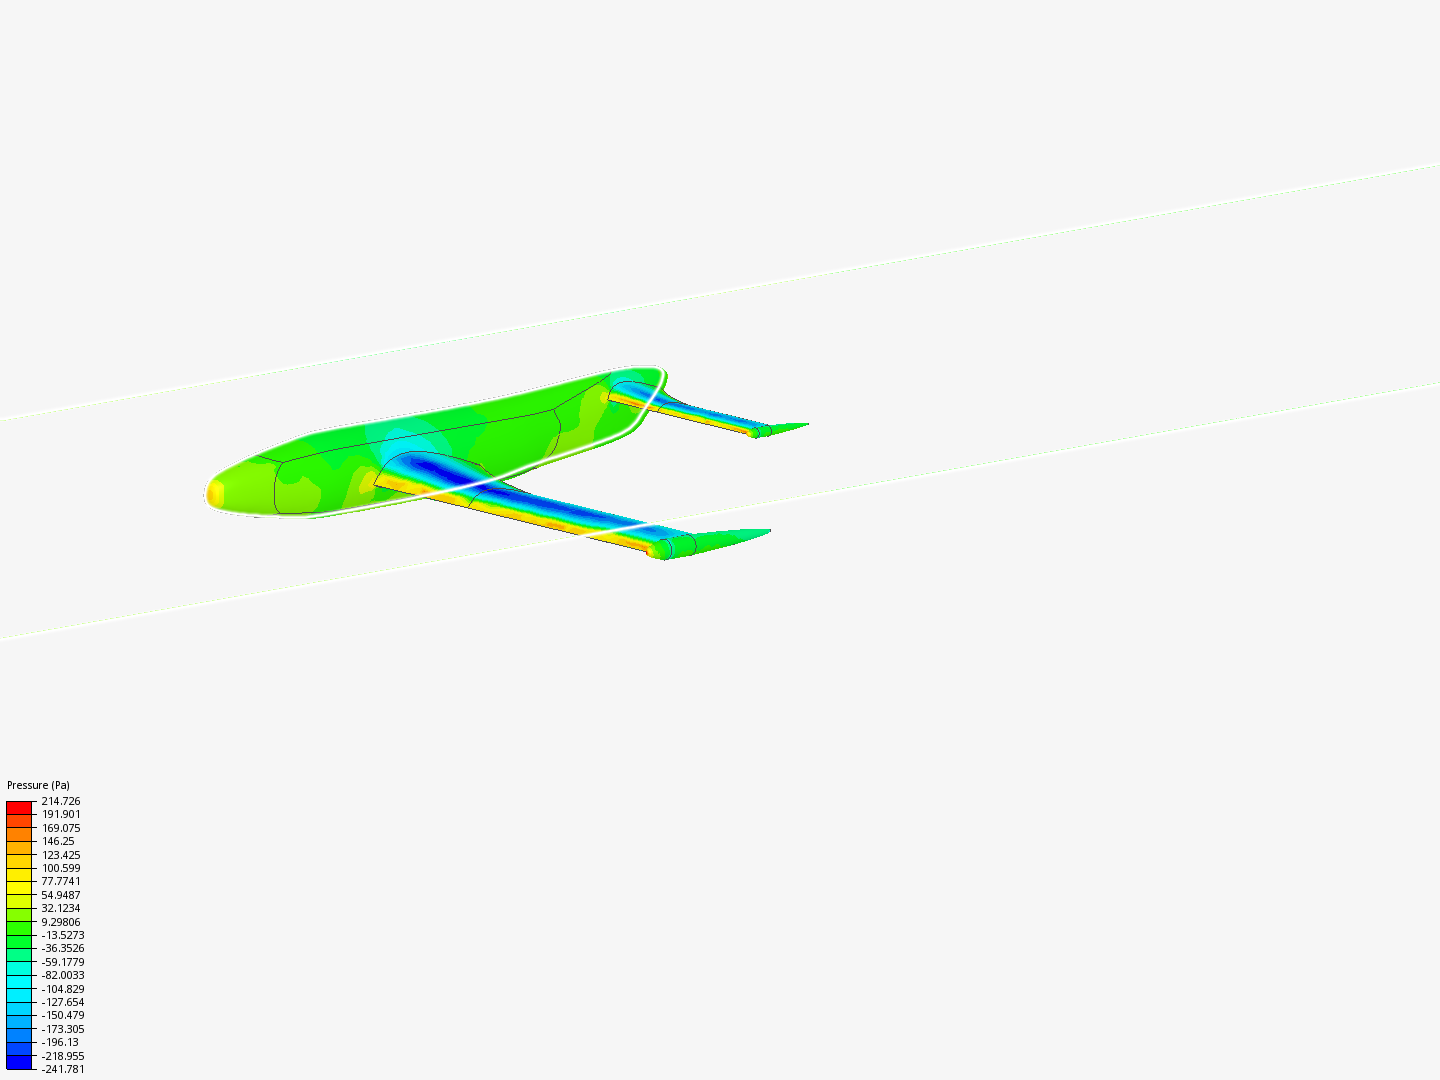 UAV 0 angle of attack image